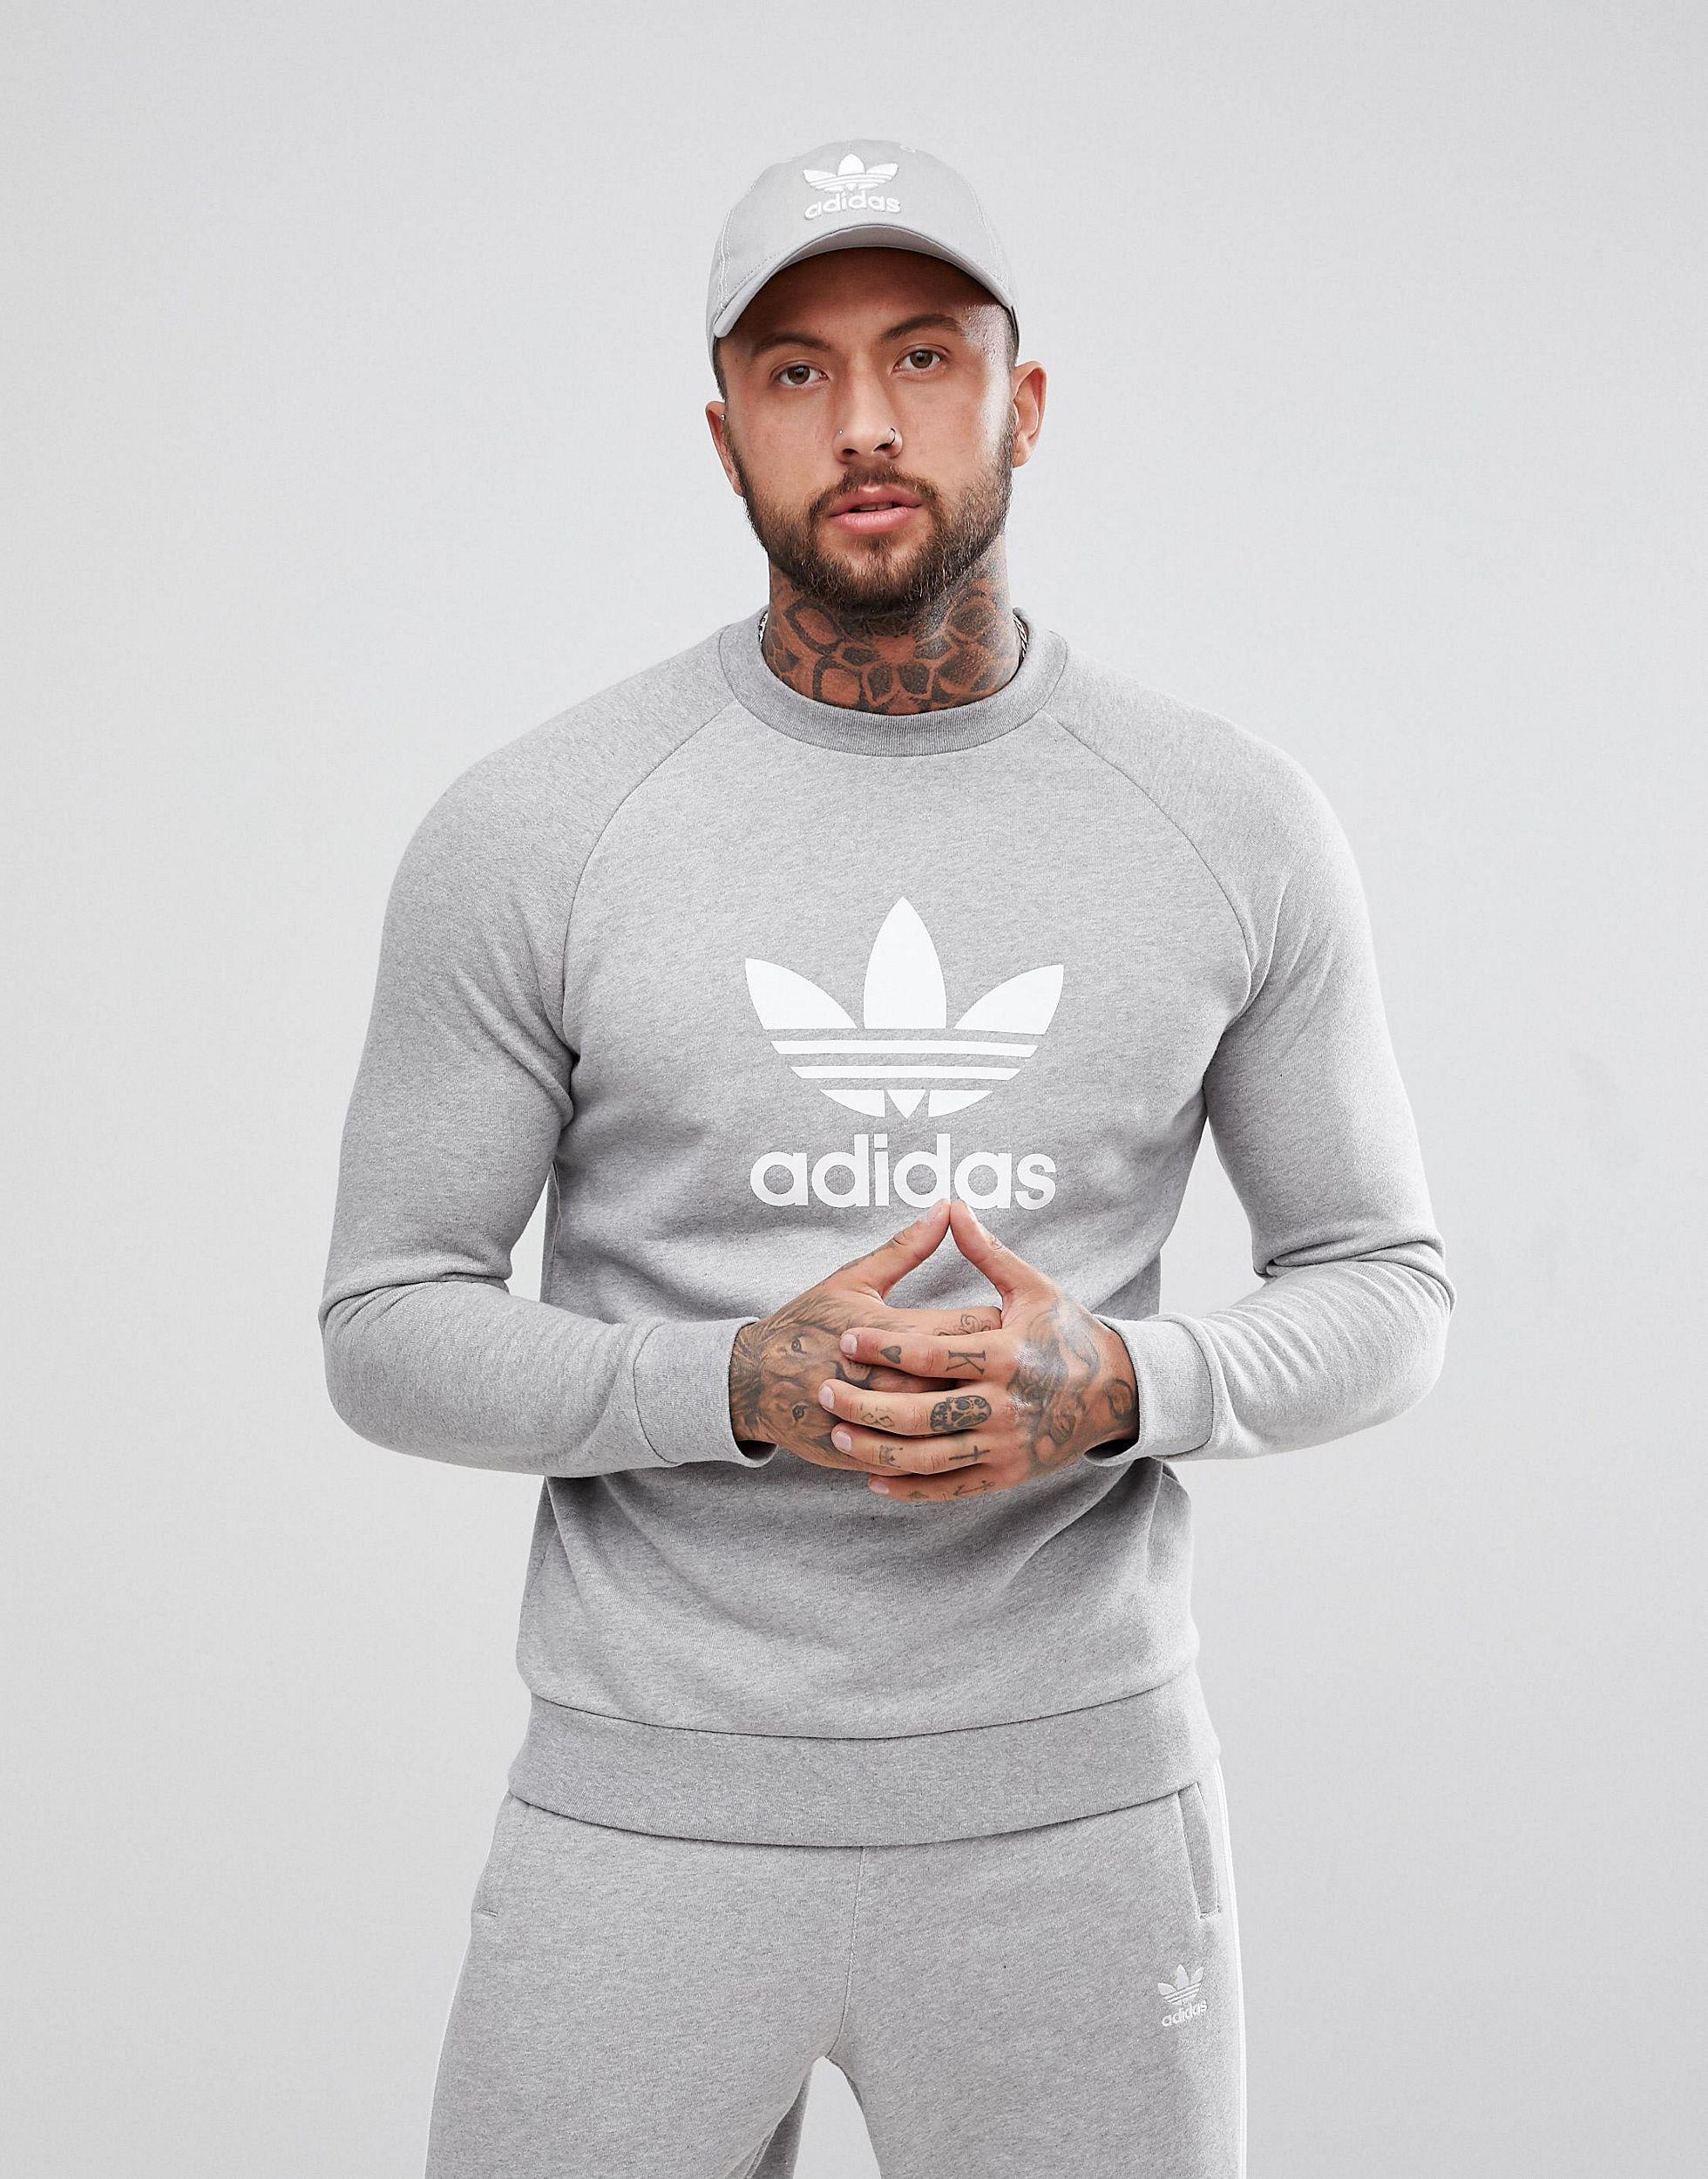 adidas Originals Sweatshirt With Large Trefoil in Grey (Gray) for Men - Lyst